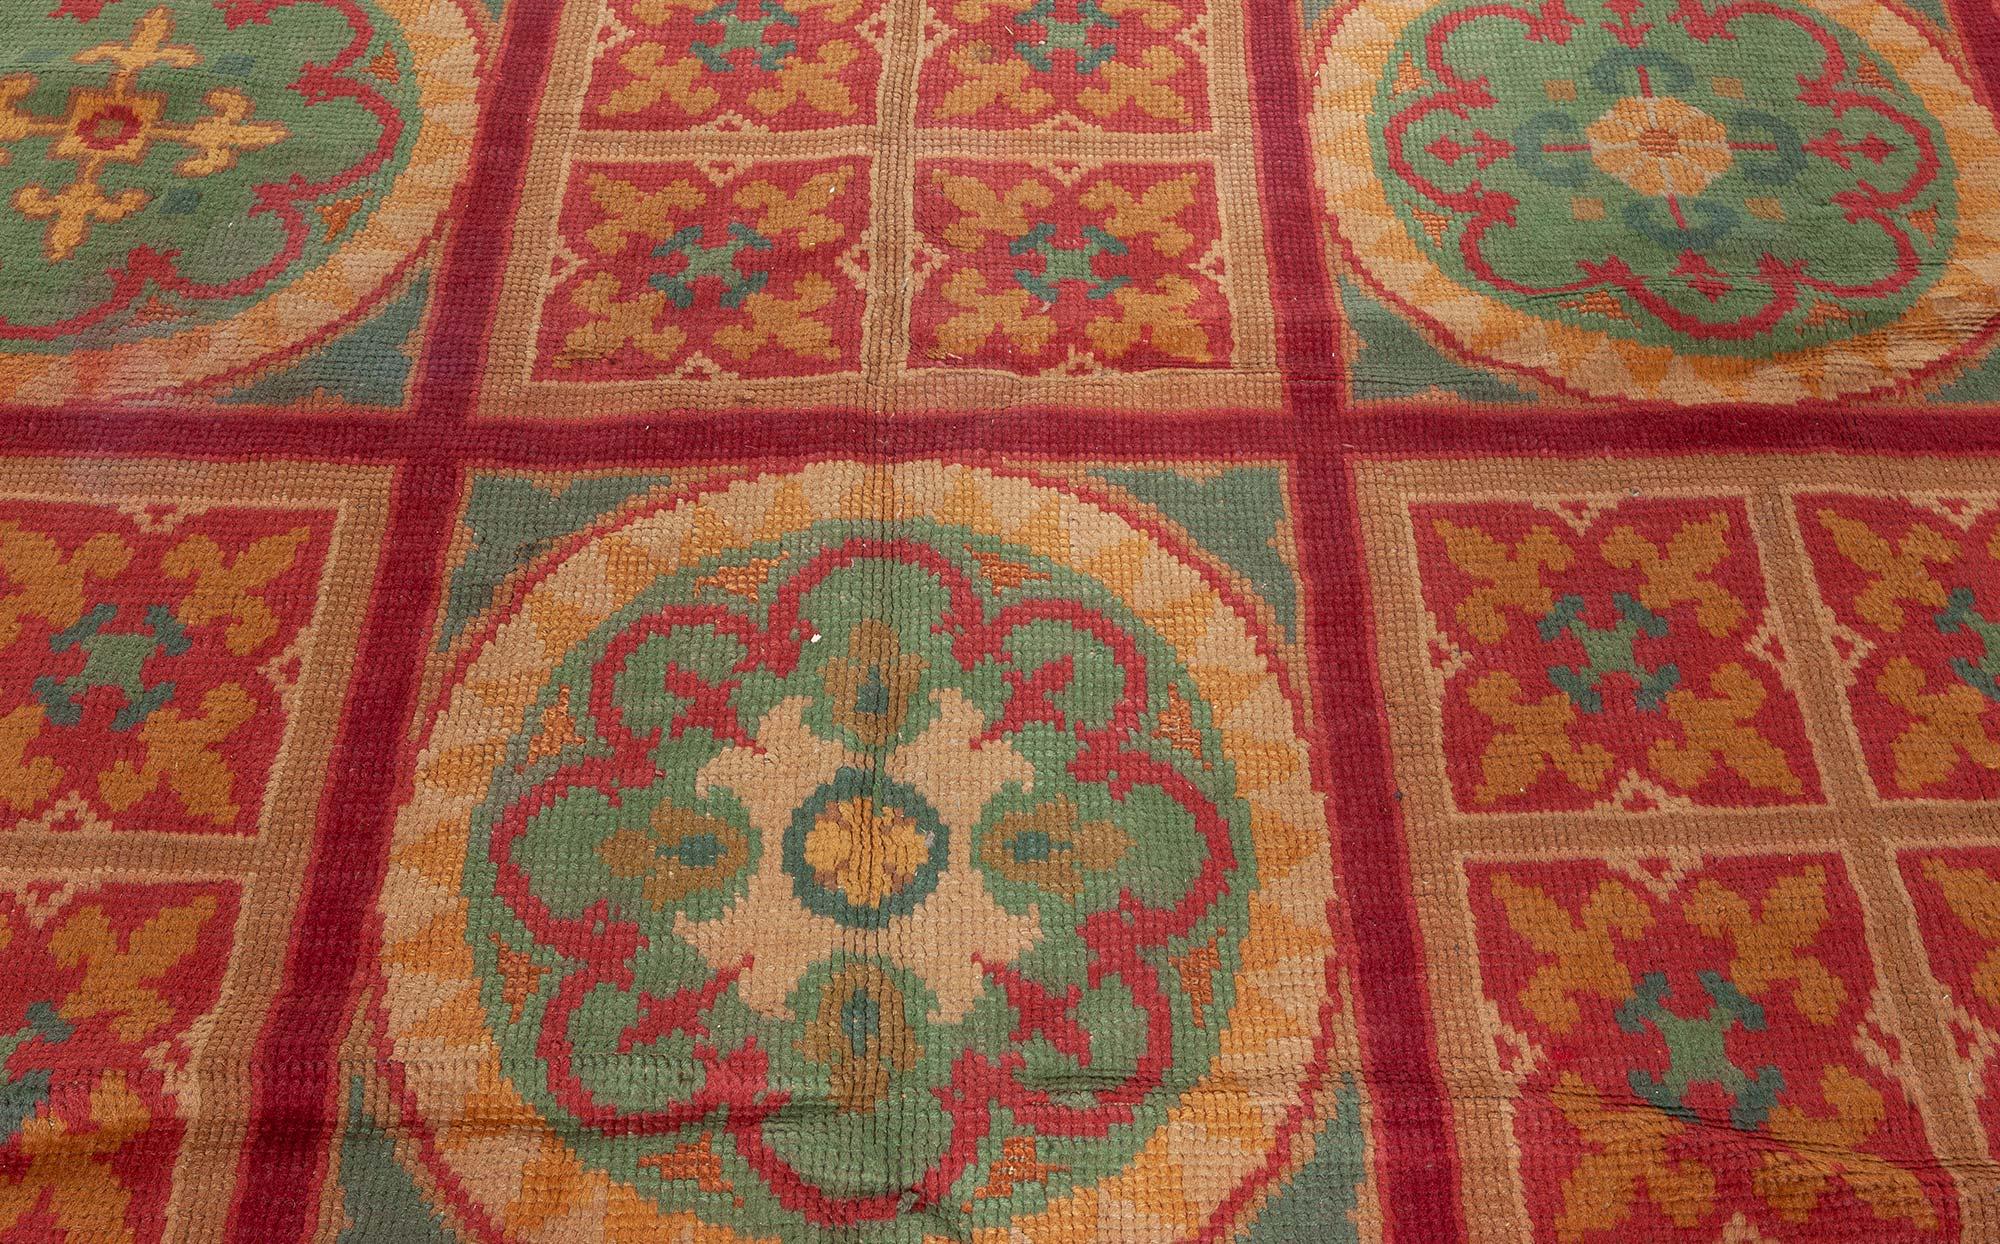 Vintage Spanish botanic handmade wool rug
Size: 13'7